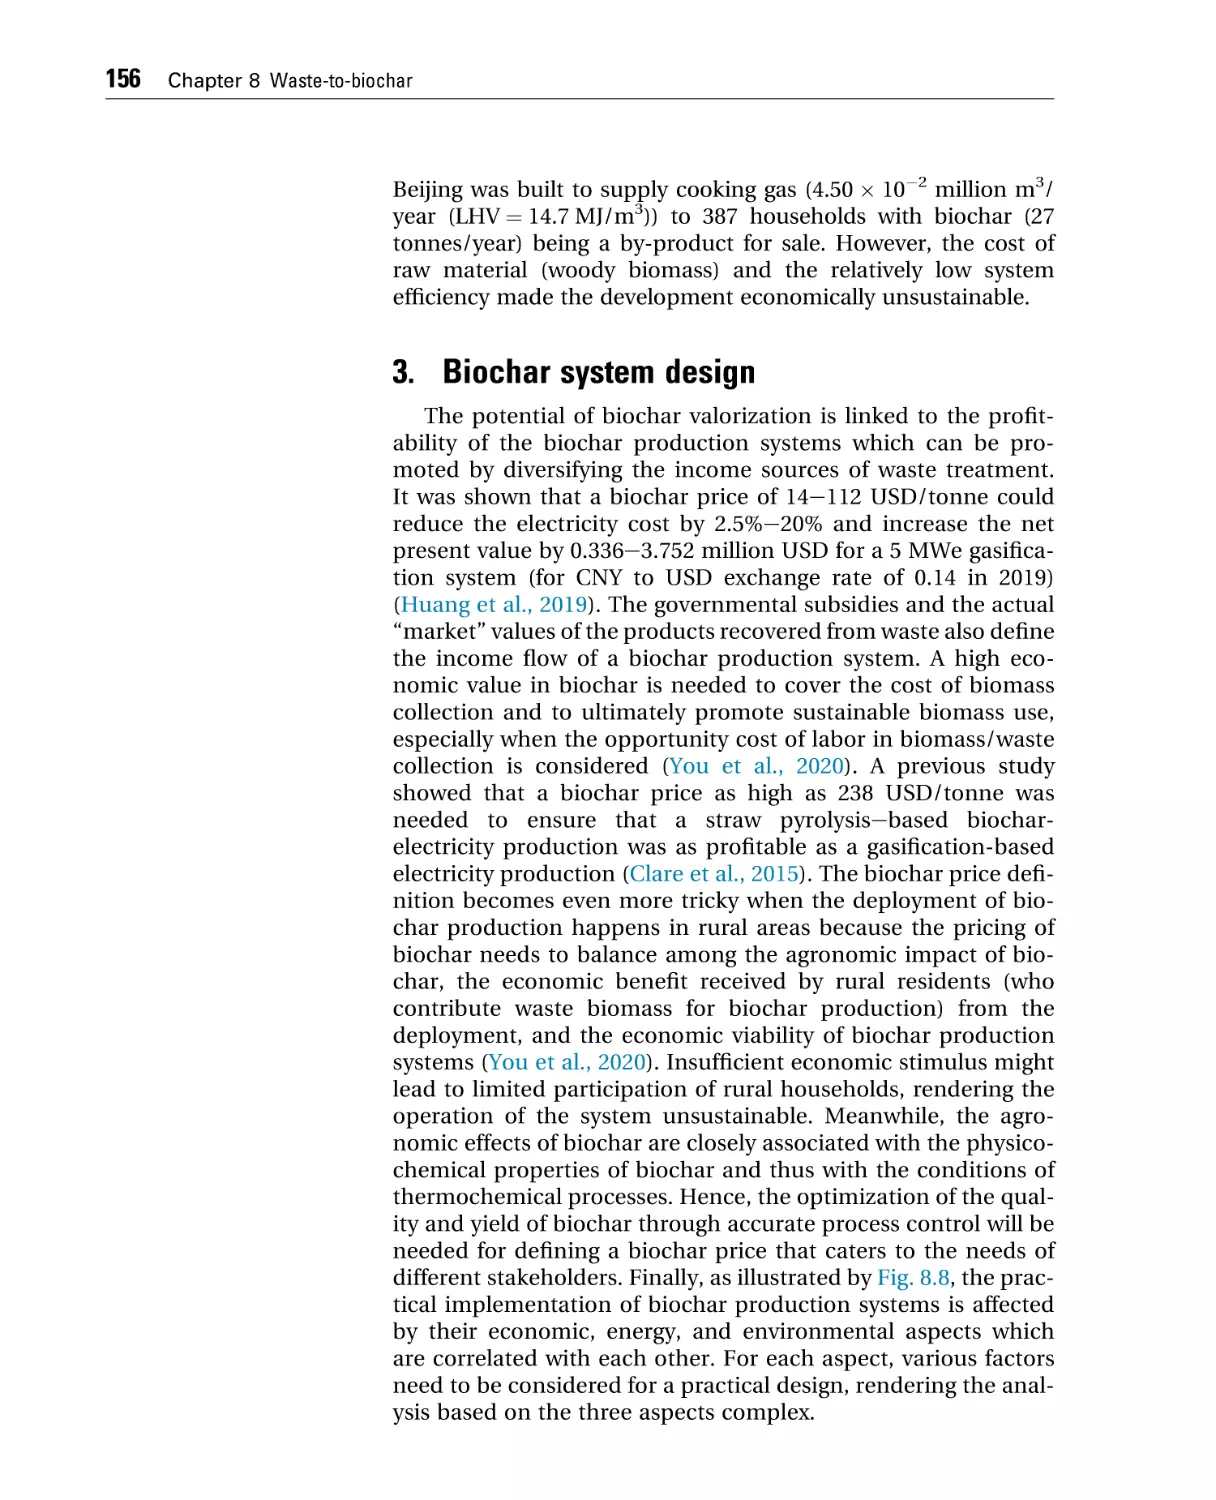 3. Biochar system design